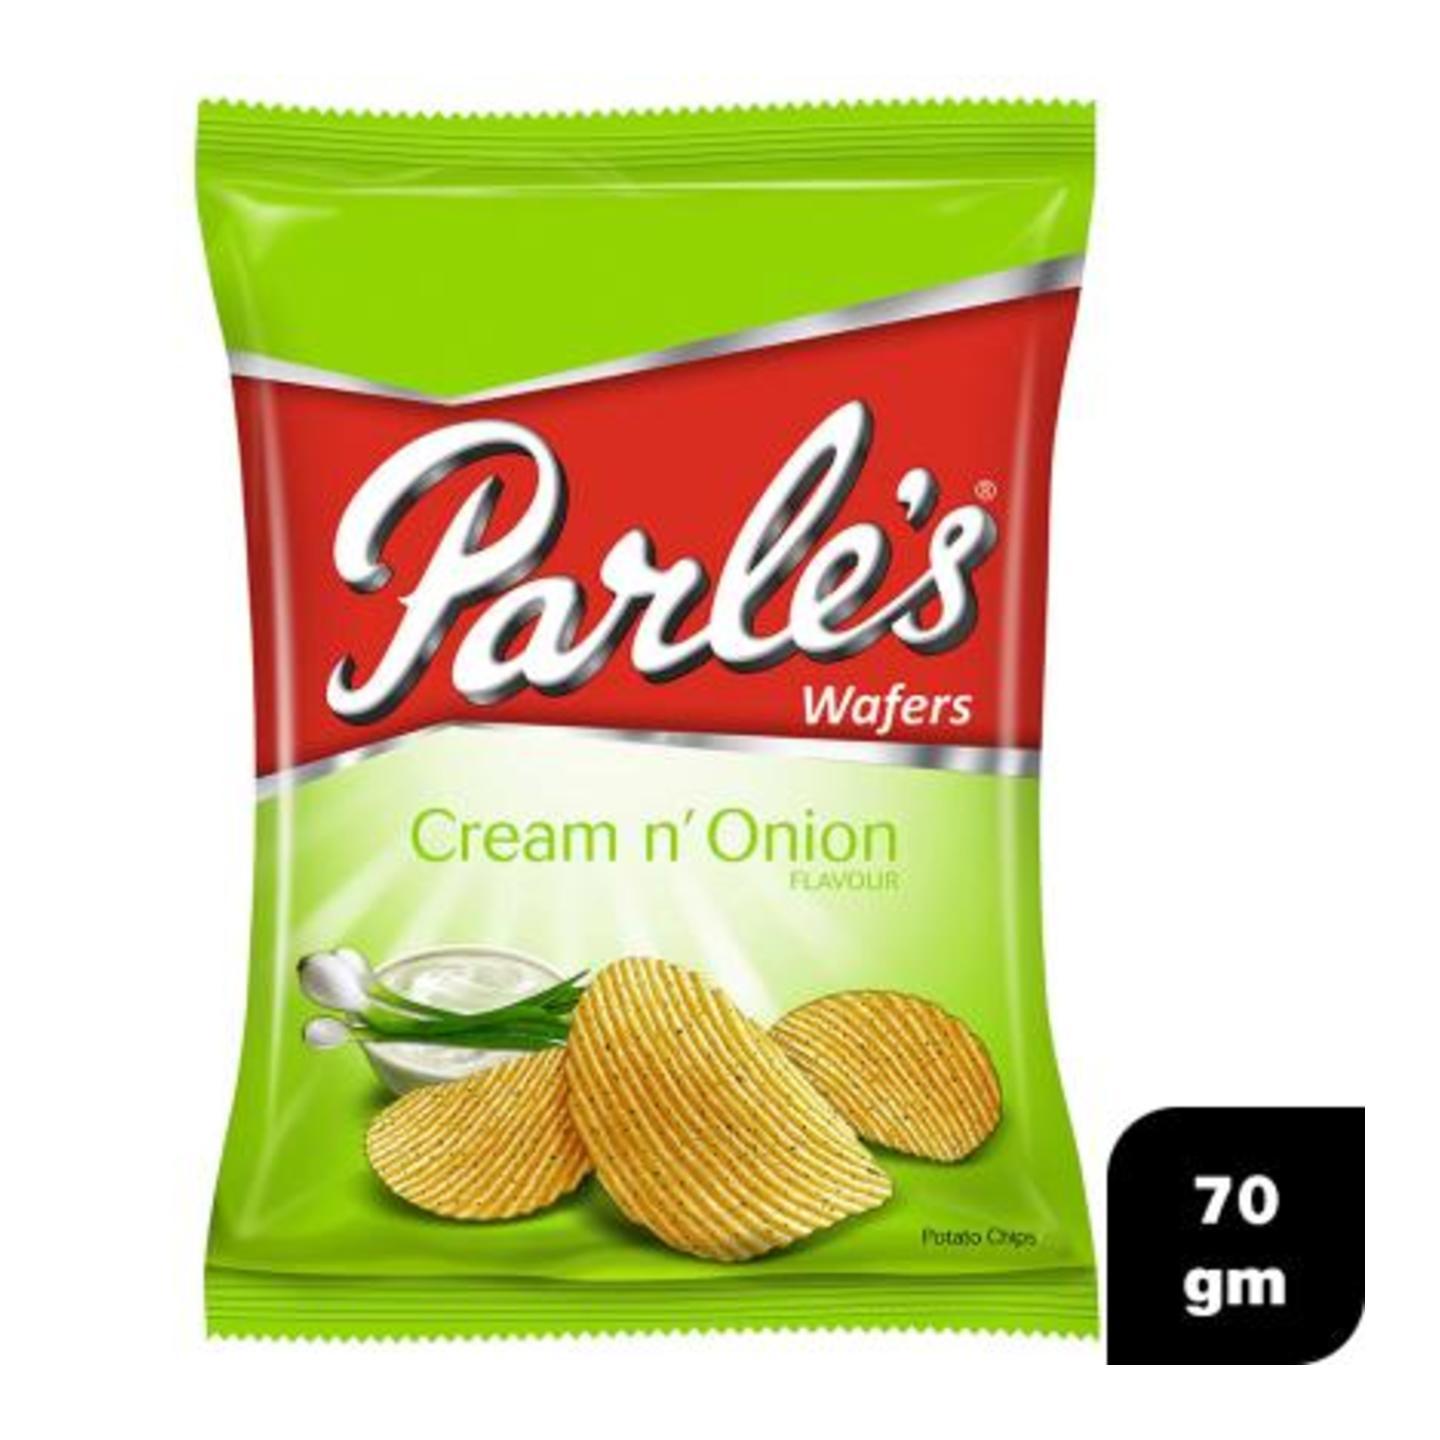 Parles Cream n Onion Wafers 70 g